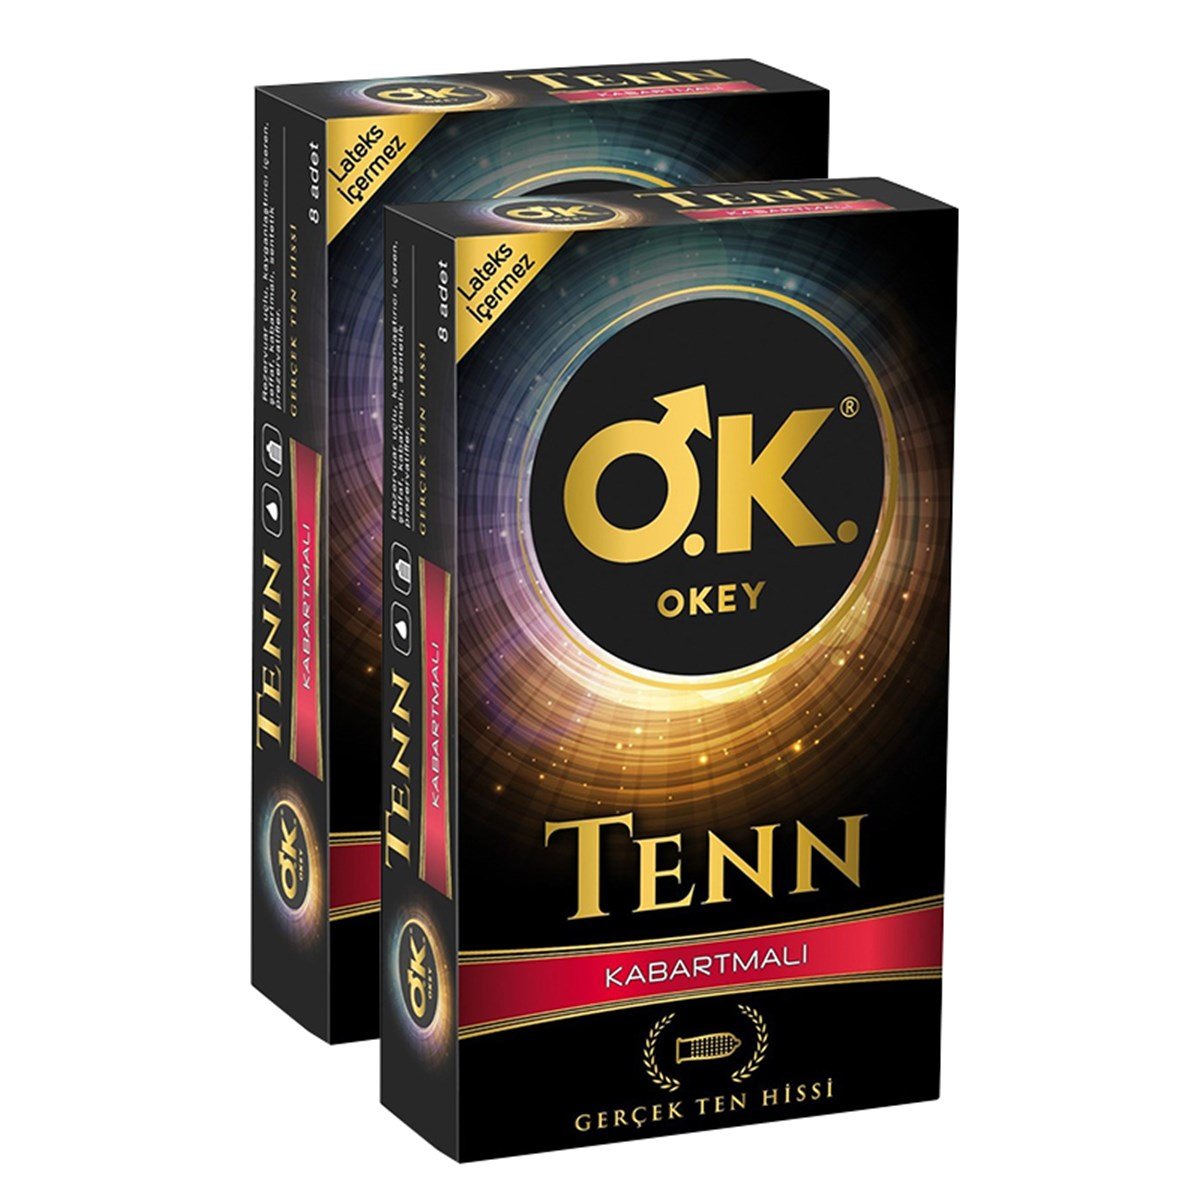 Okey Tenn Kabartmalı Prezervatif 8'li x 2 Paket | sislon.com